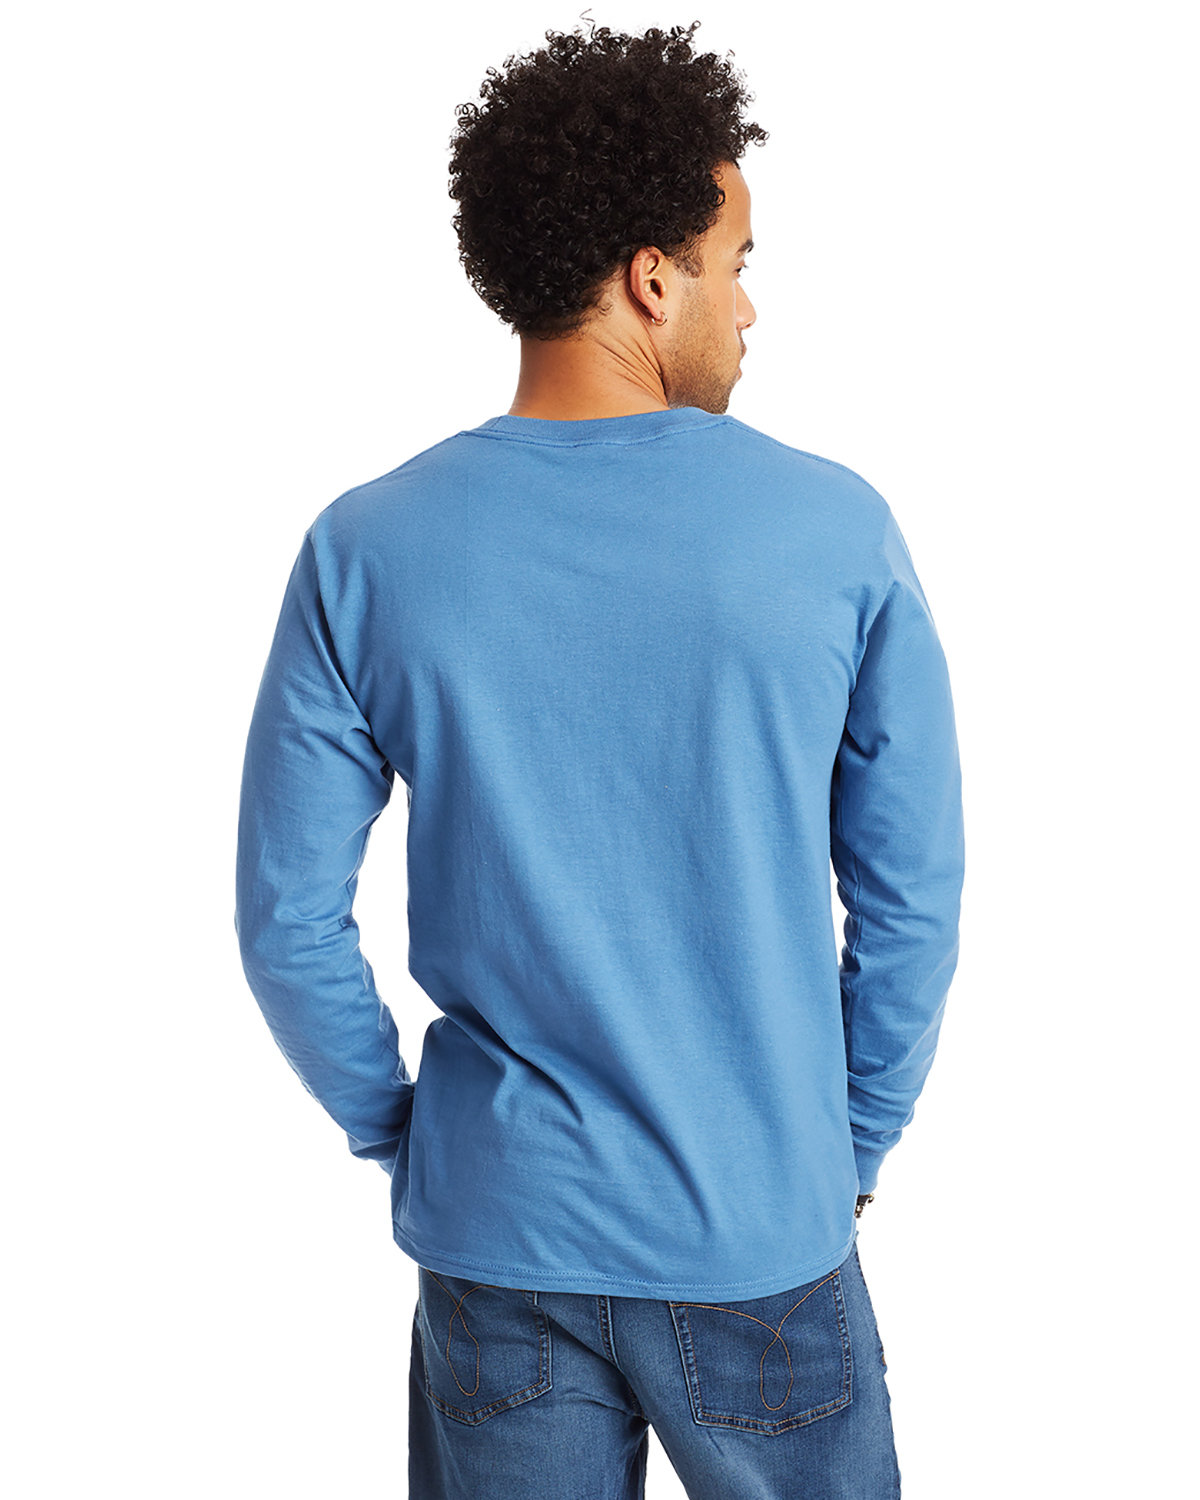 Hanes Men's 100% Cotton Long Sleeve Beefy-T® L/S Tee Shirt S-3XL 5186 ...